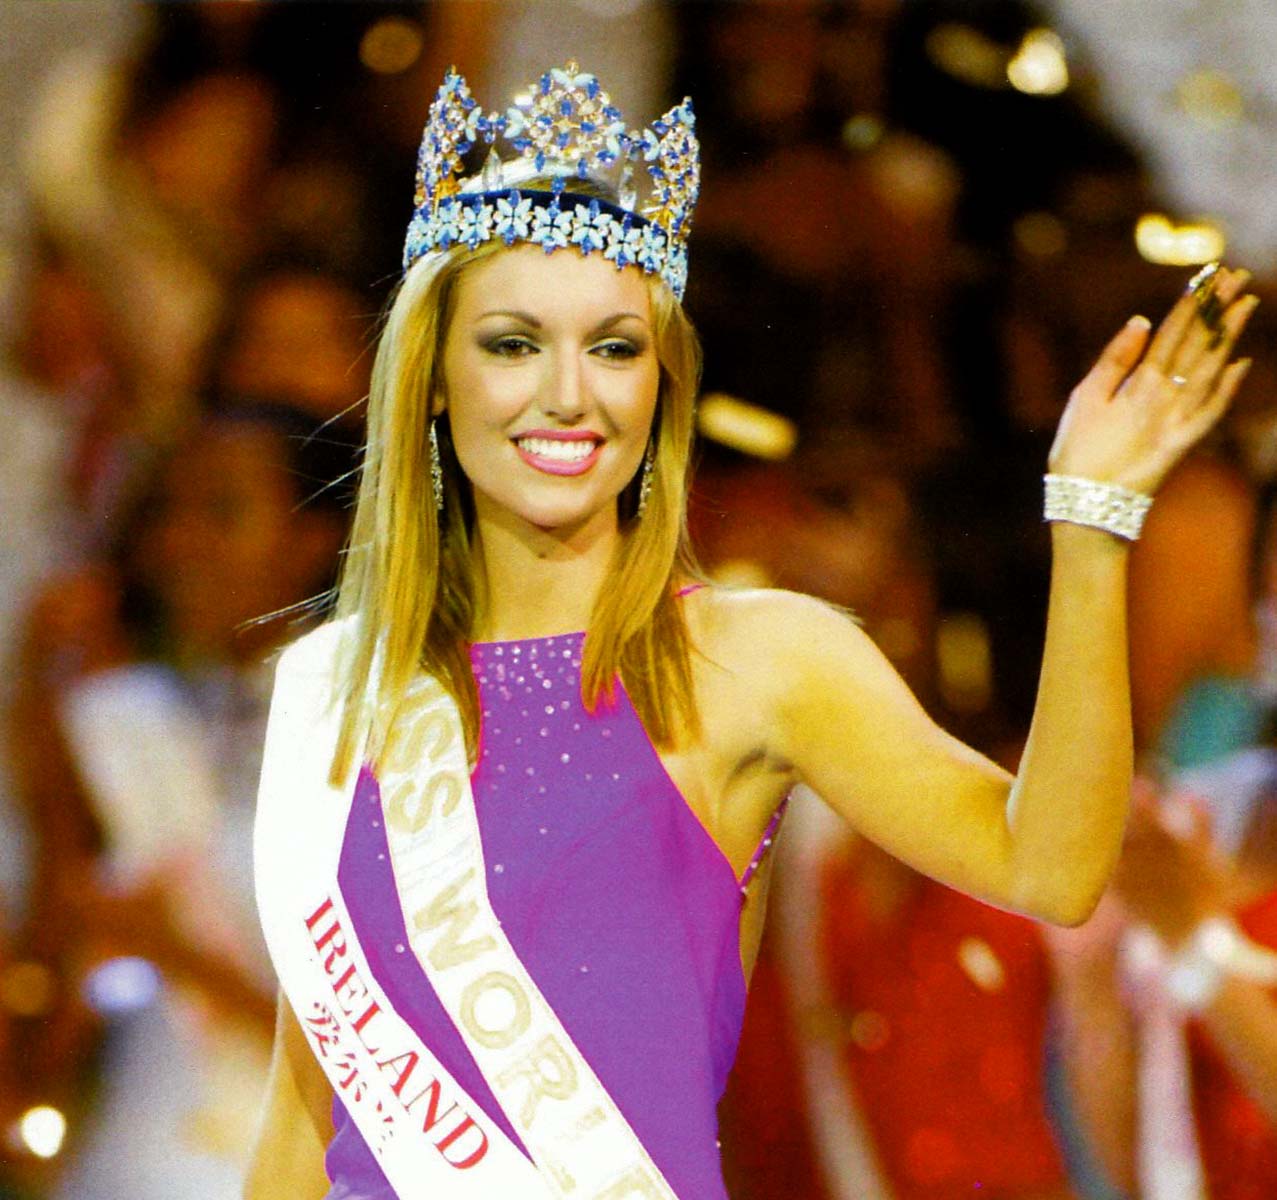 Rosanna-Davison-Miss-World-2003-for -Ireland.